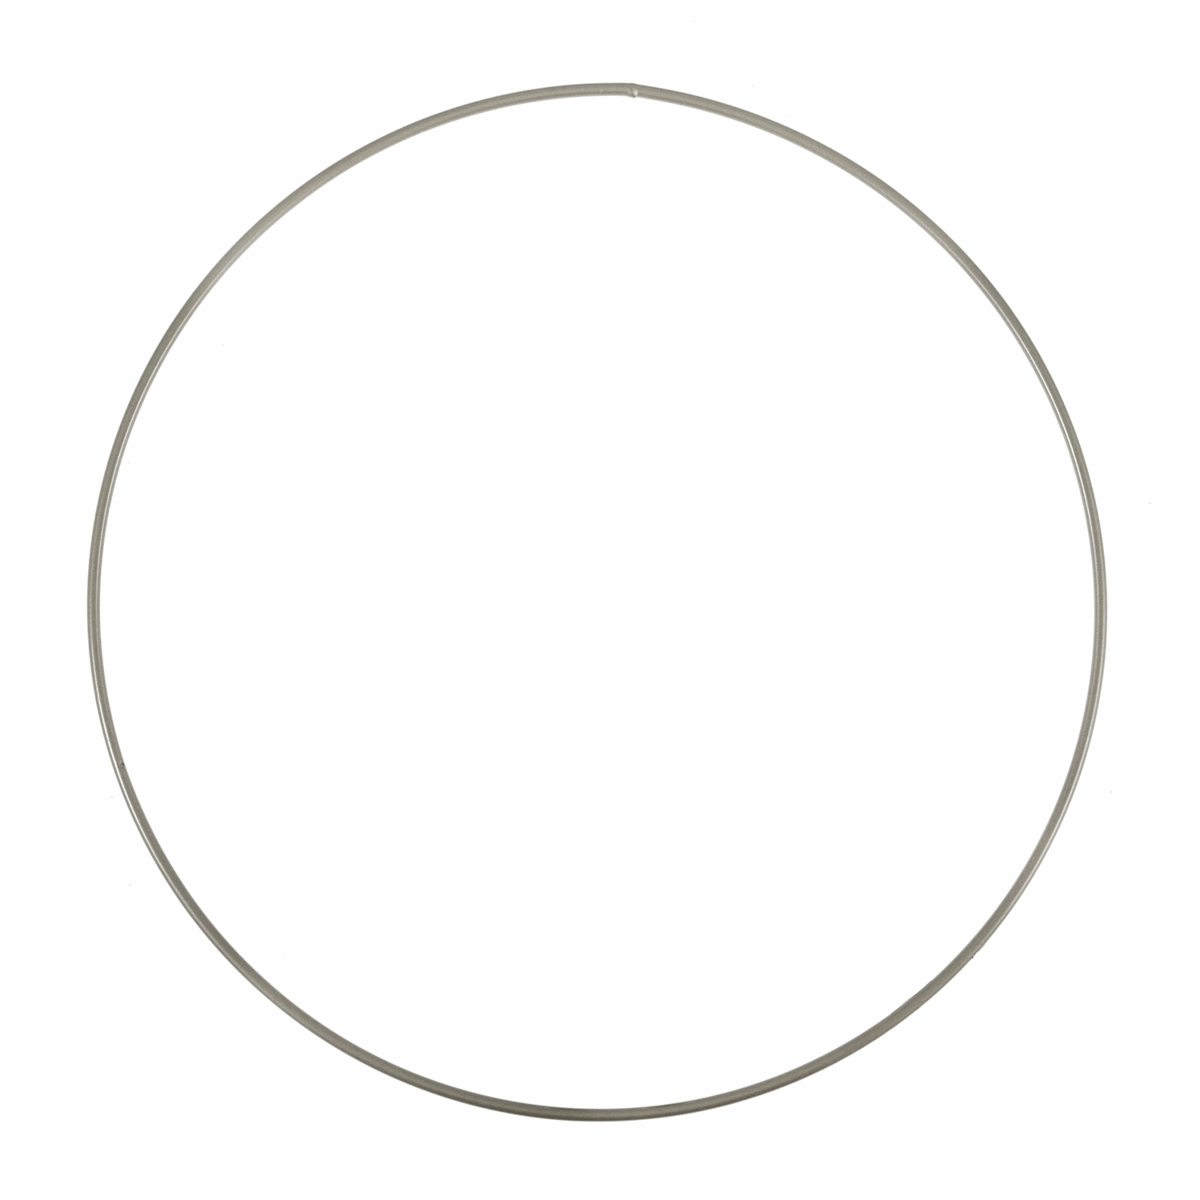 Trimits Silver Metal Wire Craft Hoop - 25cm